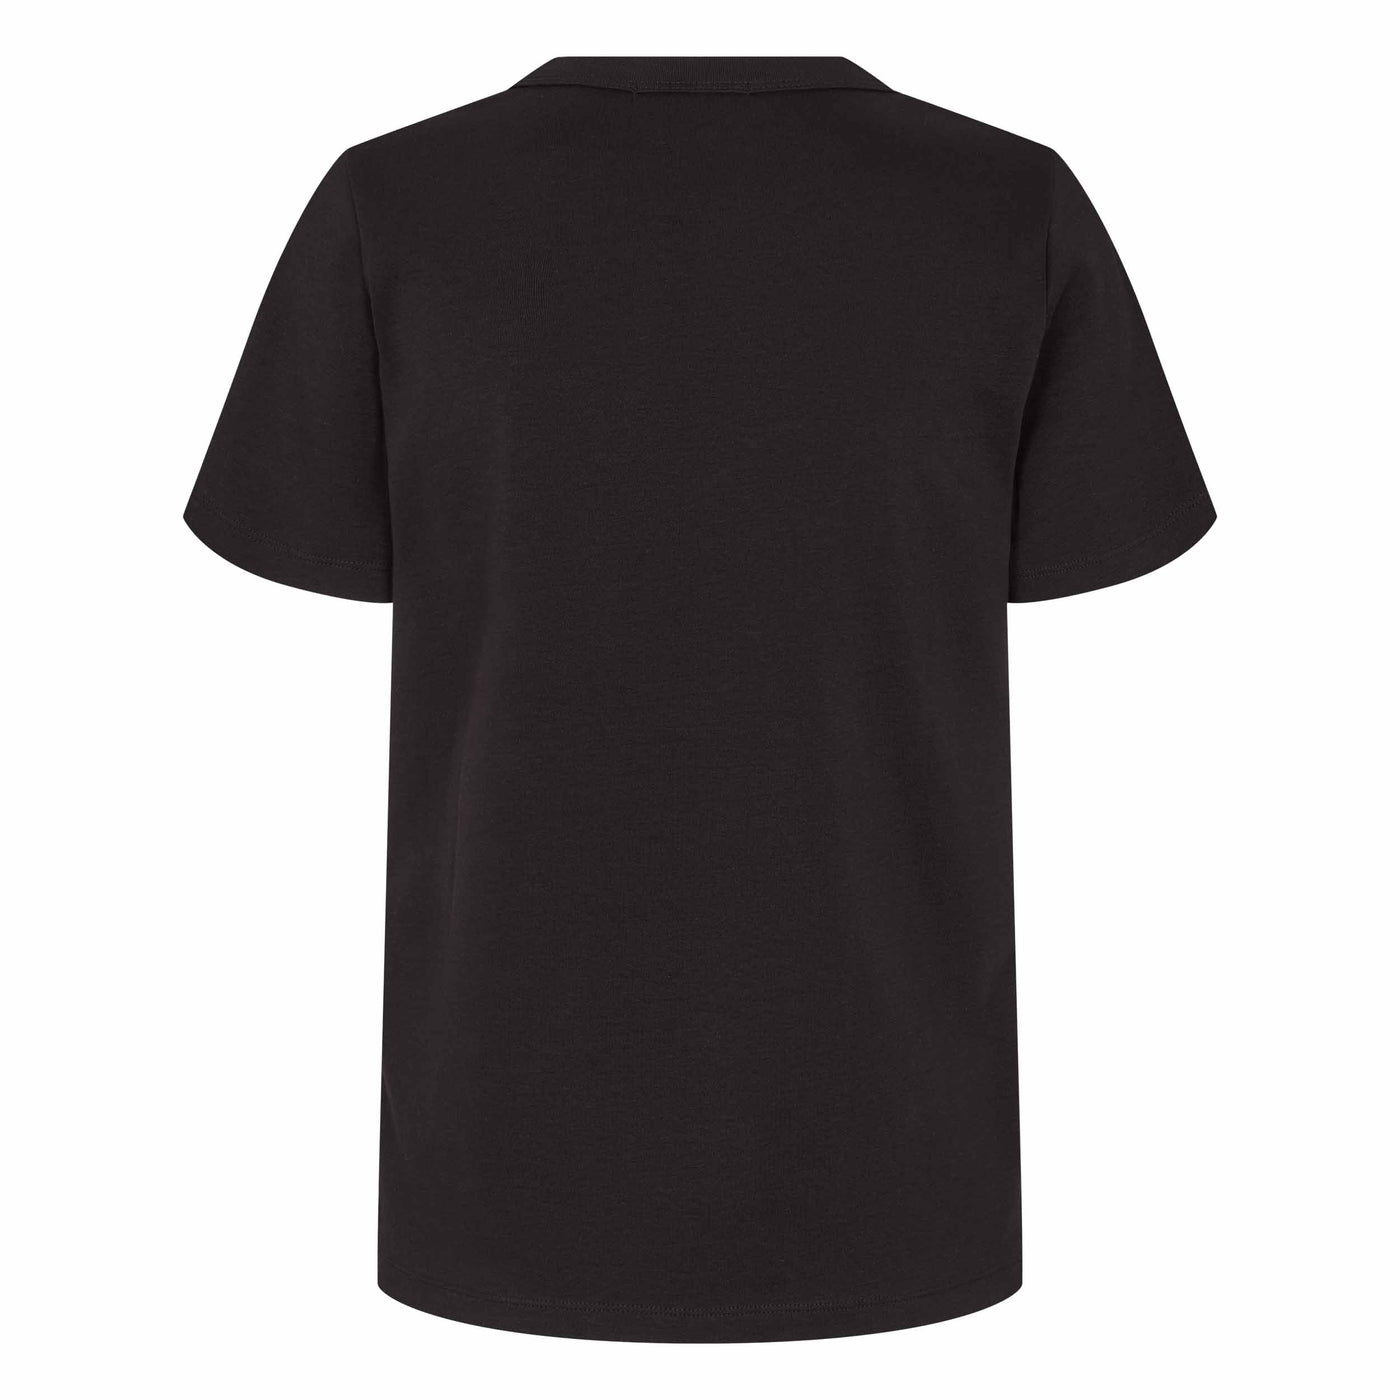 Soft Rebels SRHella T-shirt Tops & t-shirts 001 Black